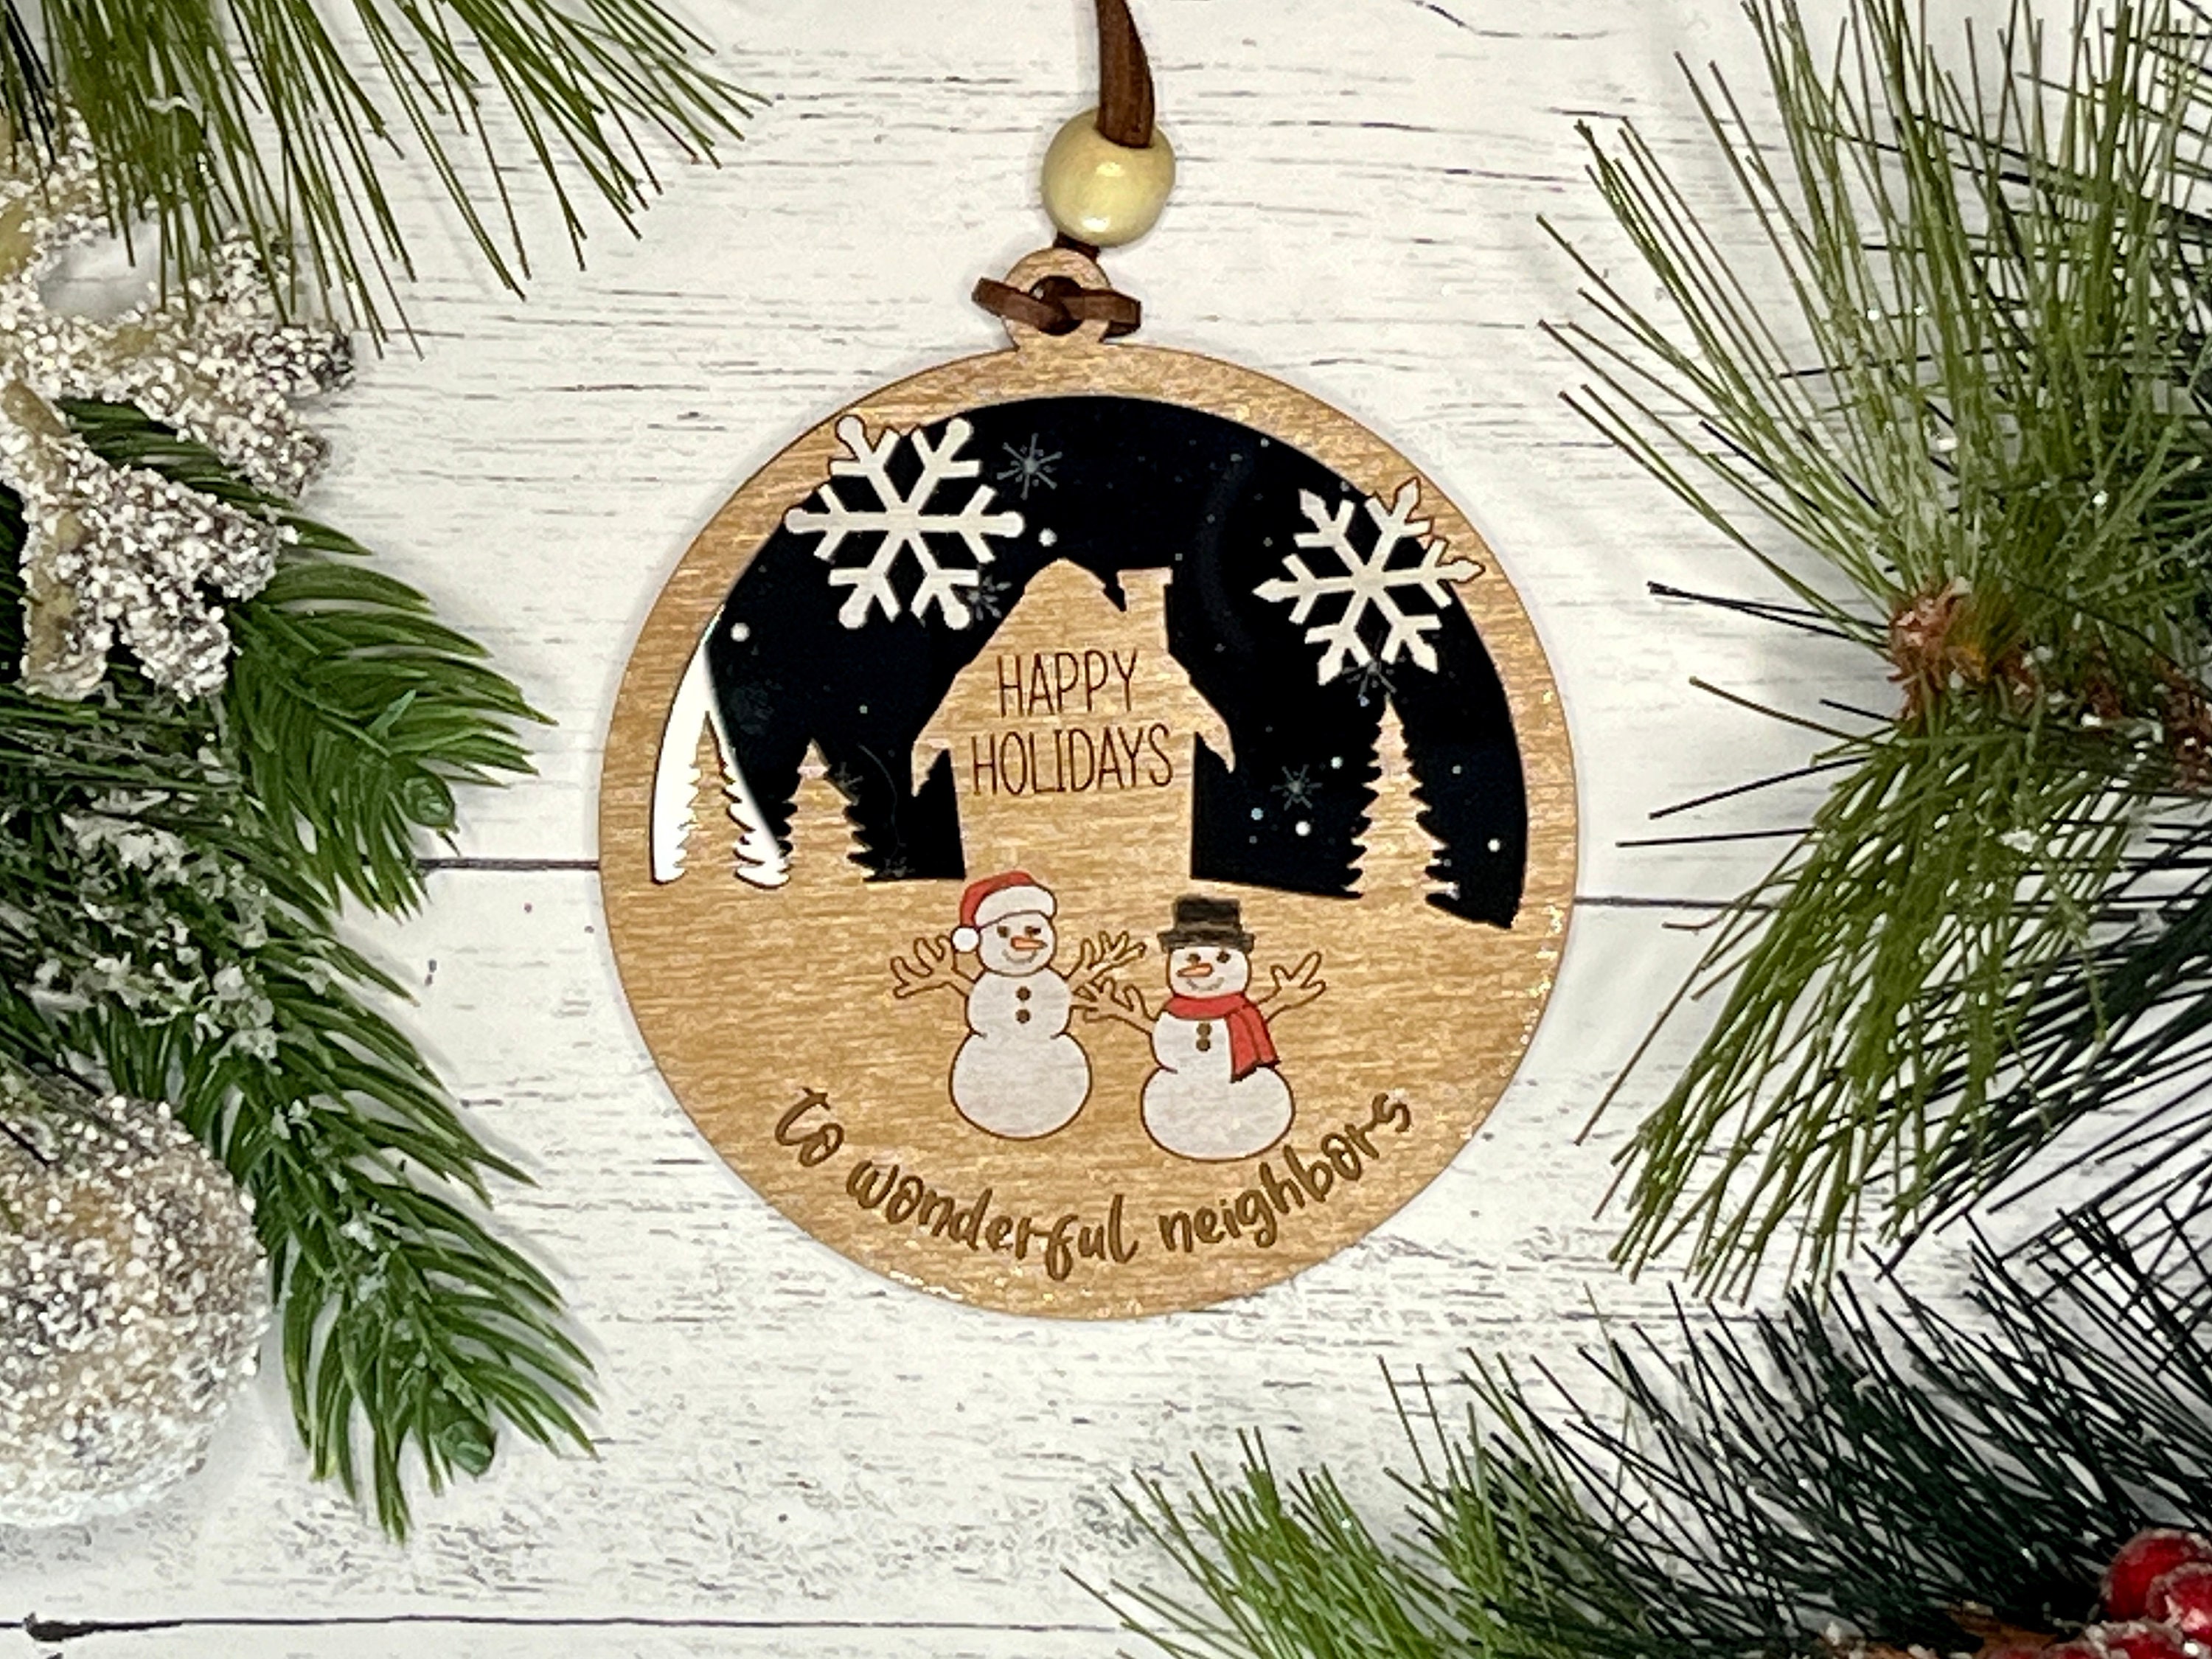 Fun Holiday Neighbor Gifts - Holiday Gift Ideas for Neighbors - Hello Adams  Family